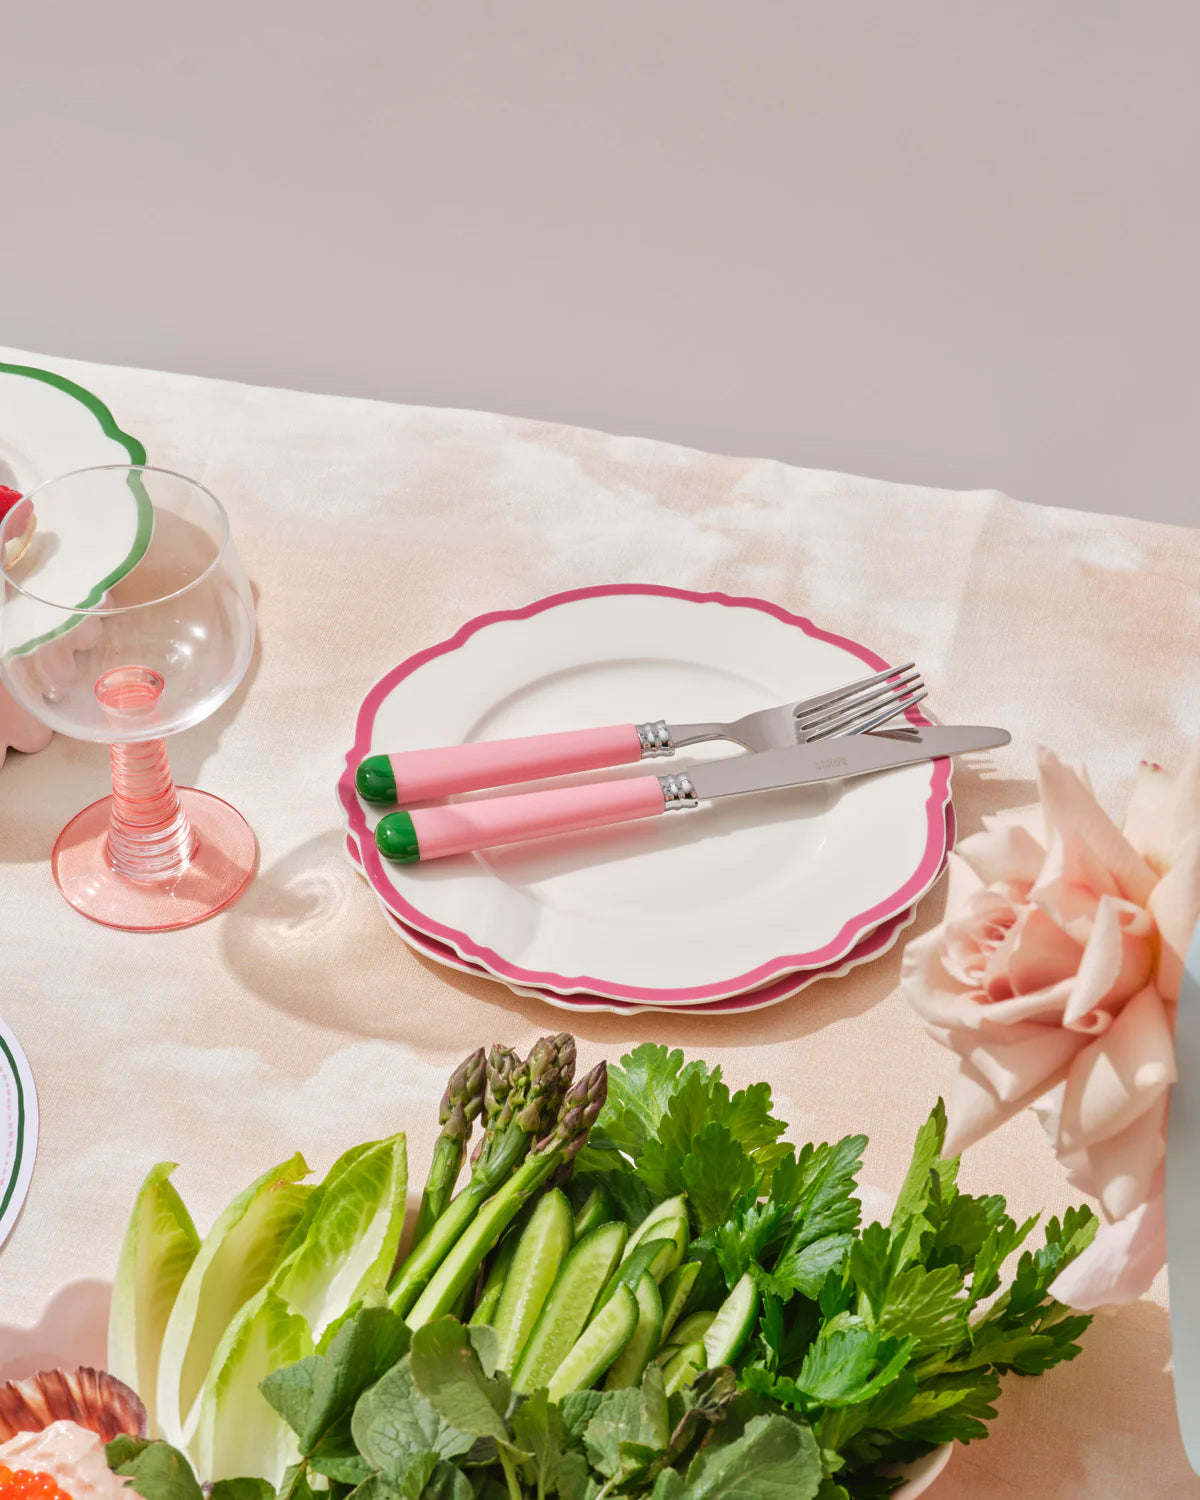 Pink & Green Cutlery Set 16 Piece